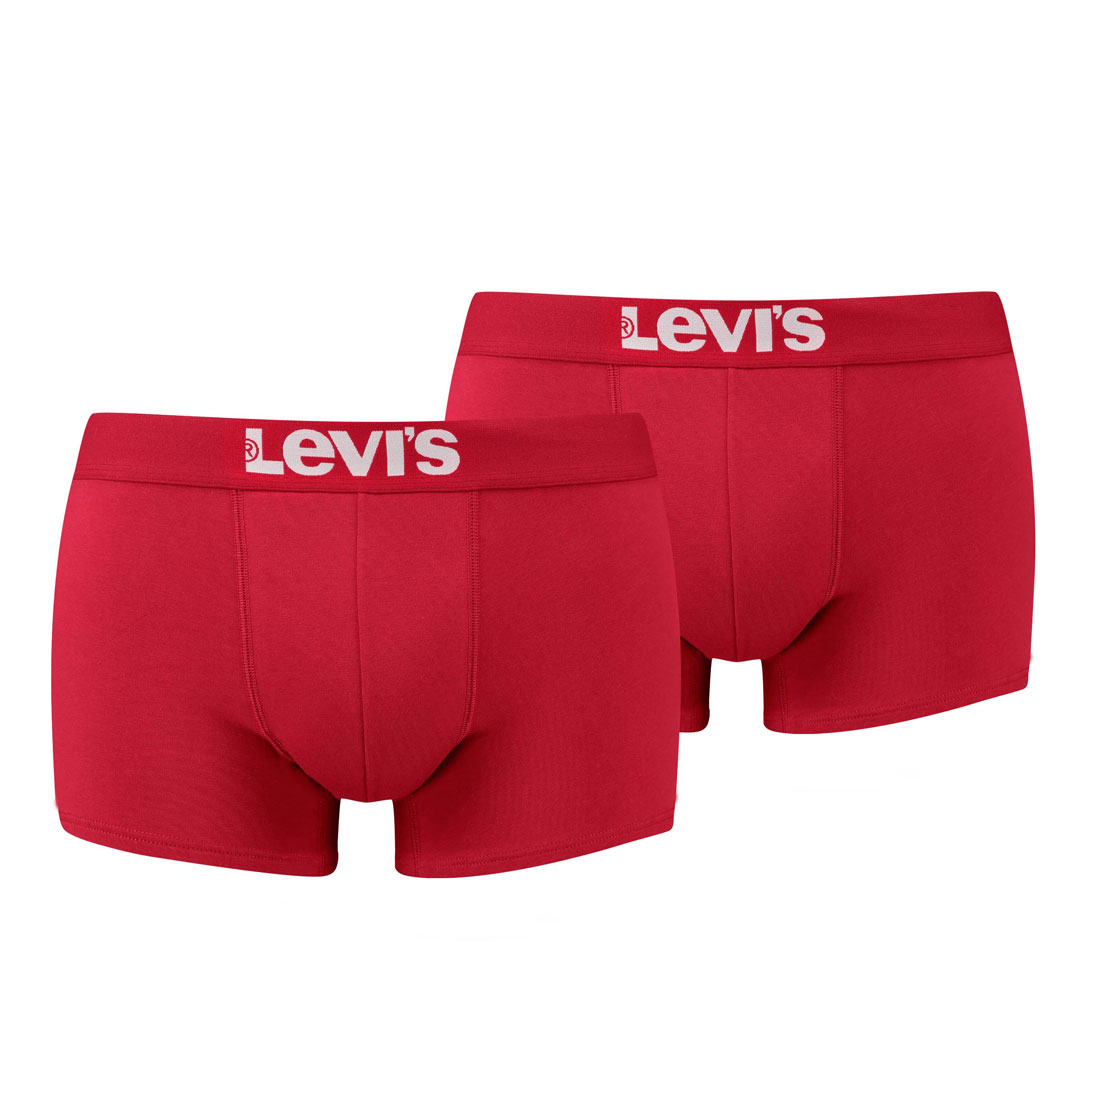 Levi's Herren Levis Men SOLID Basic Trunk 2P Boxershorts, Rot (Chili Pepper 186), Medium (Herstellergröße: 020) (2er Pack)